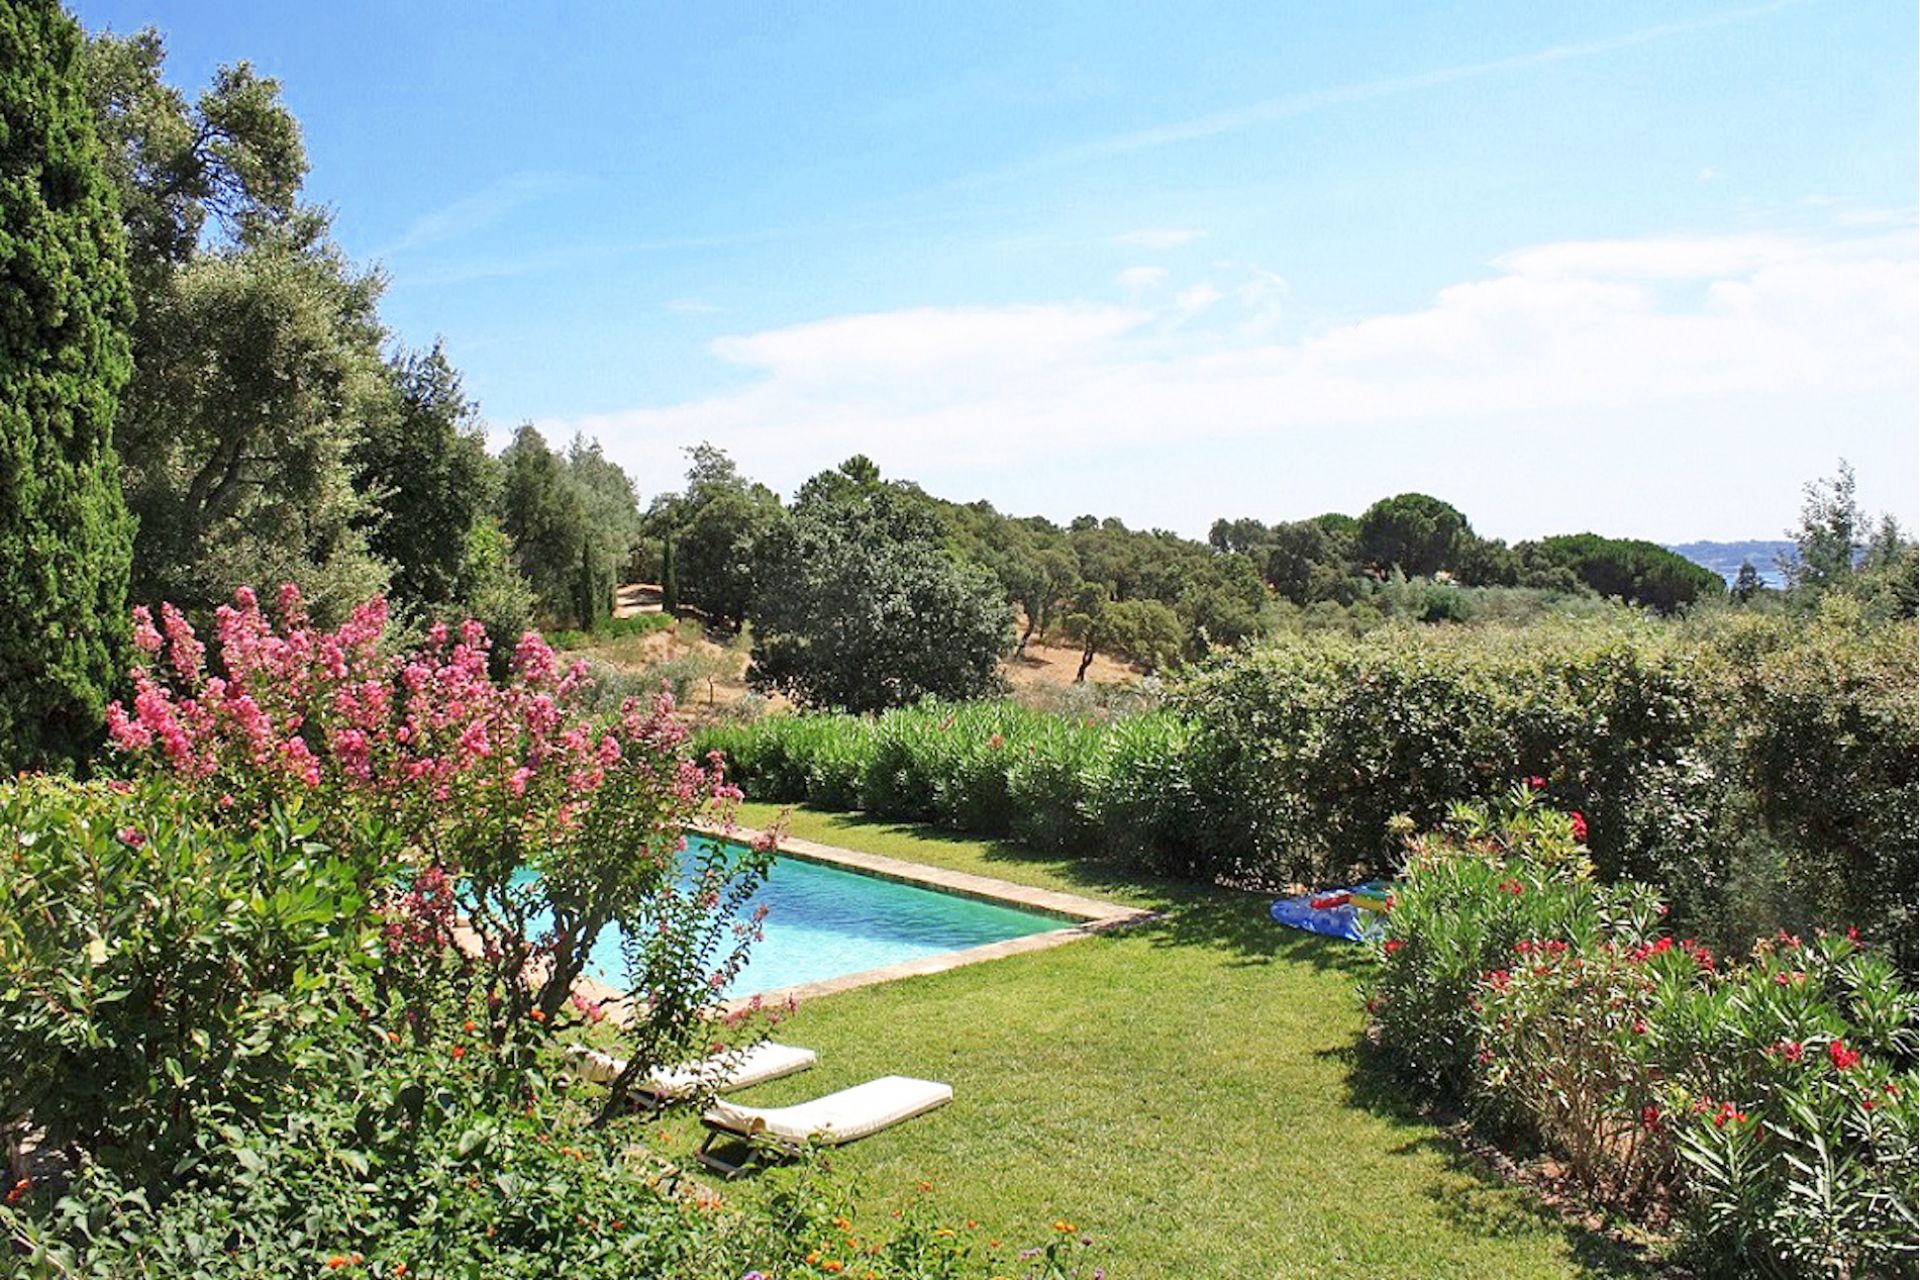 Méditerranée Location Villa with Private pool in Grimaud, Côte d'Azur